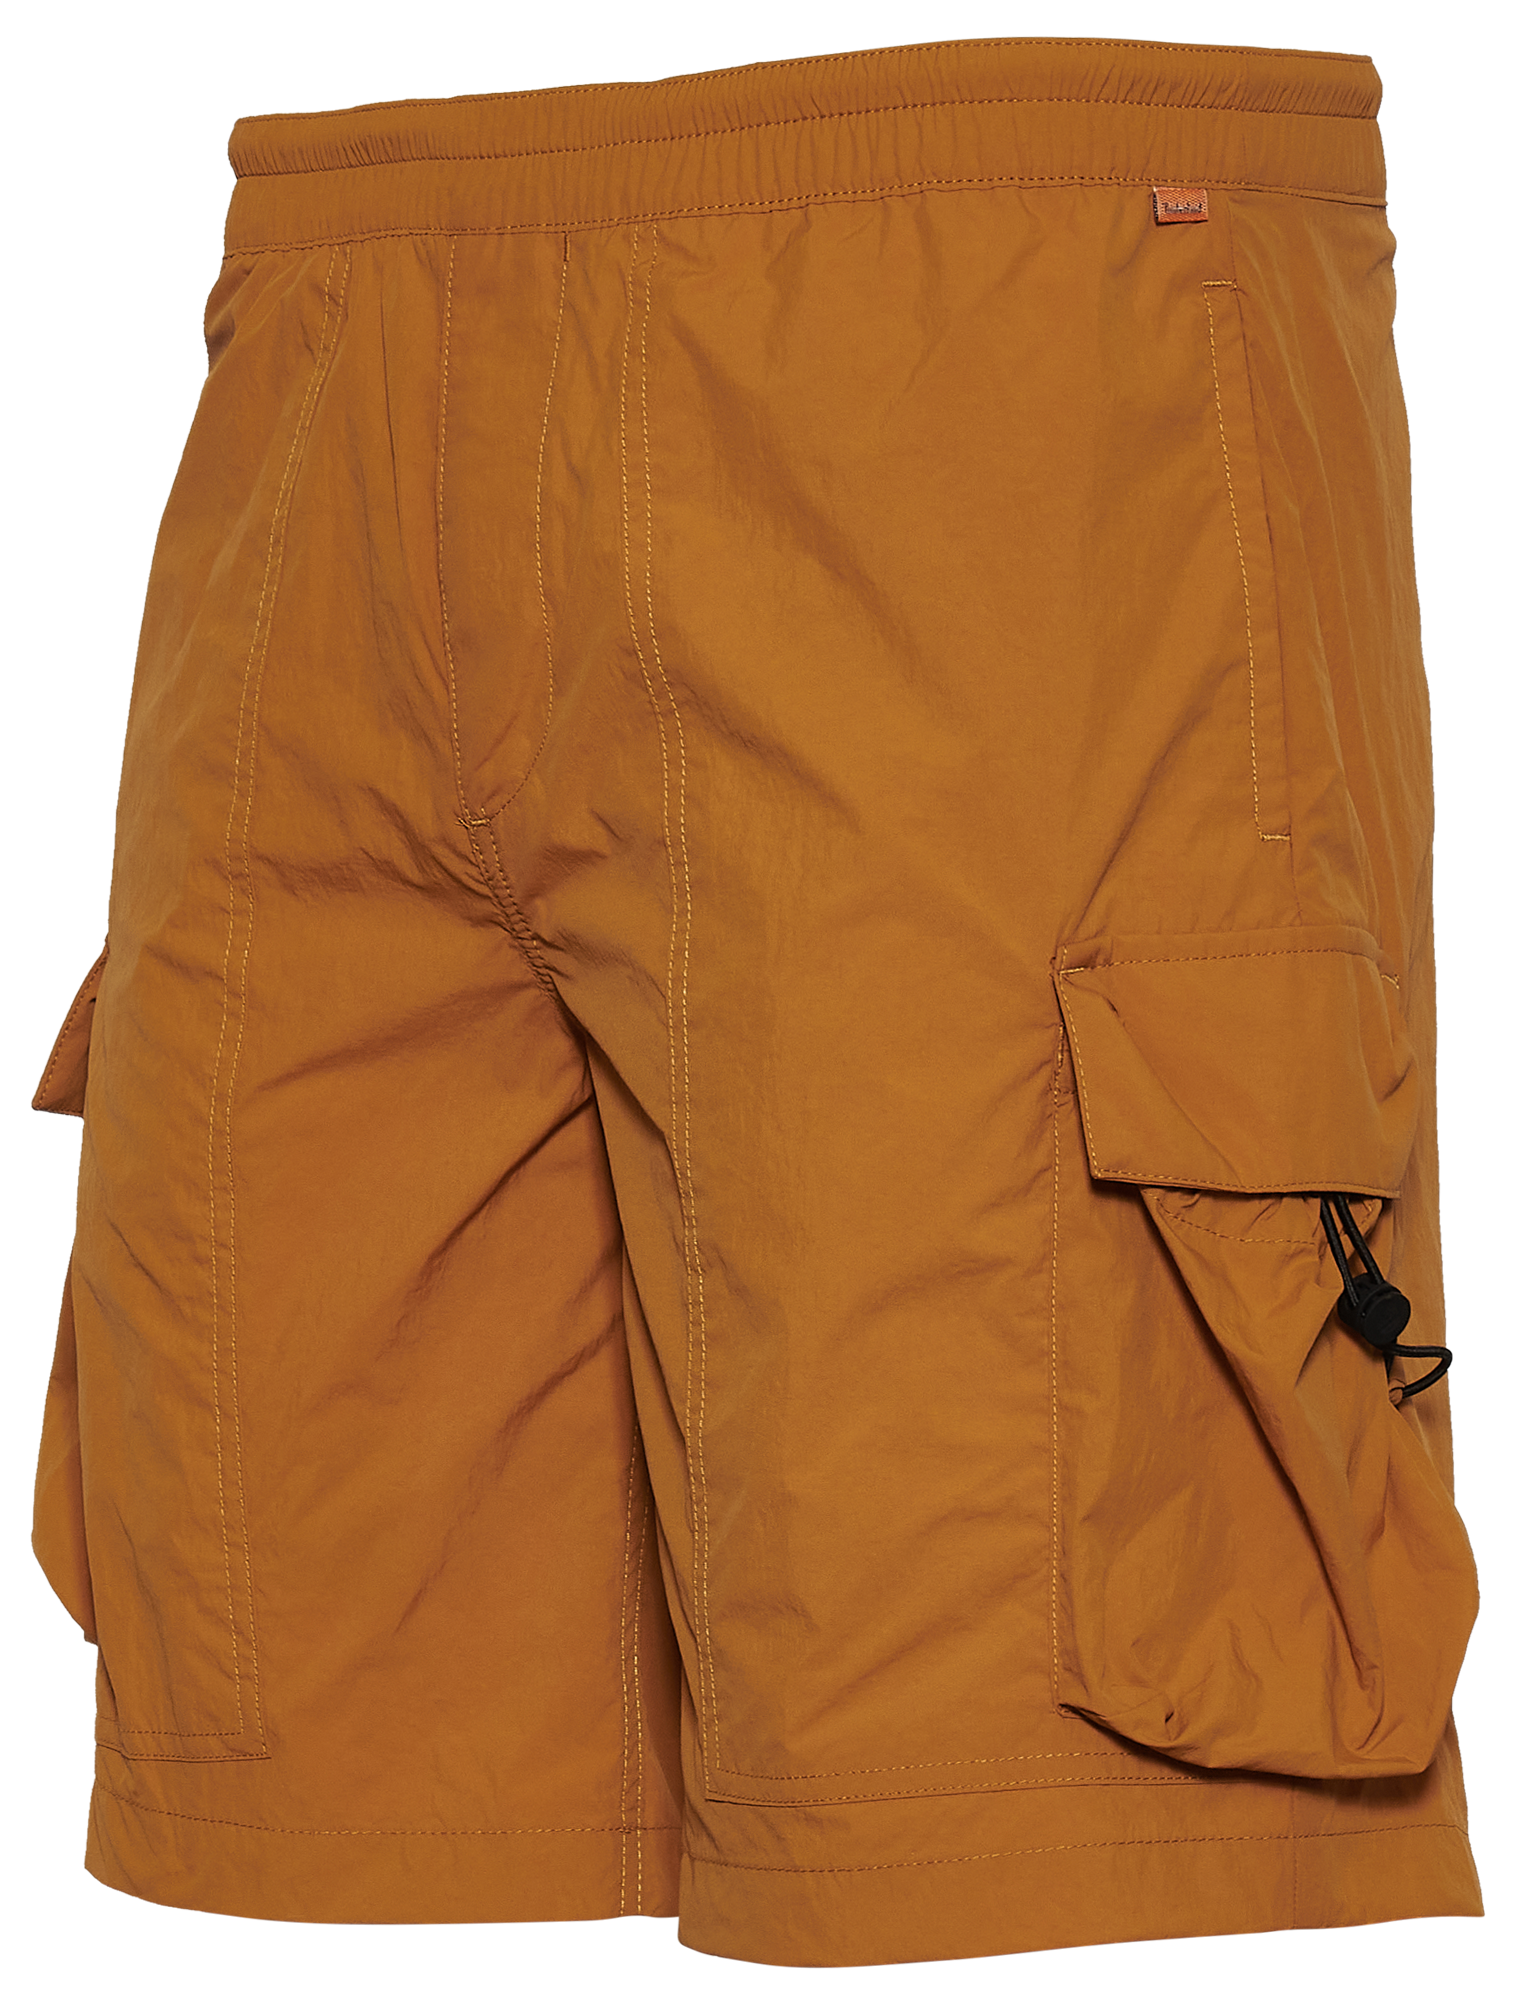 Timberland Outdoor Cargo Shorts - Men's